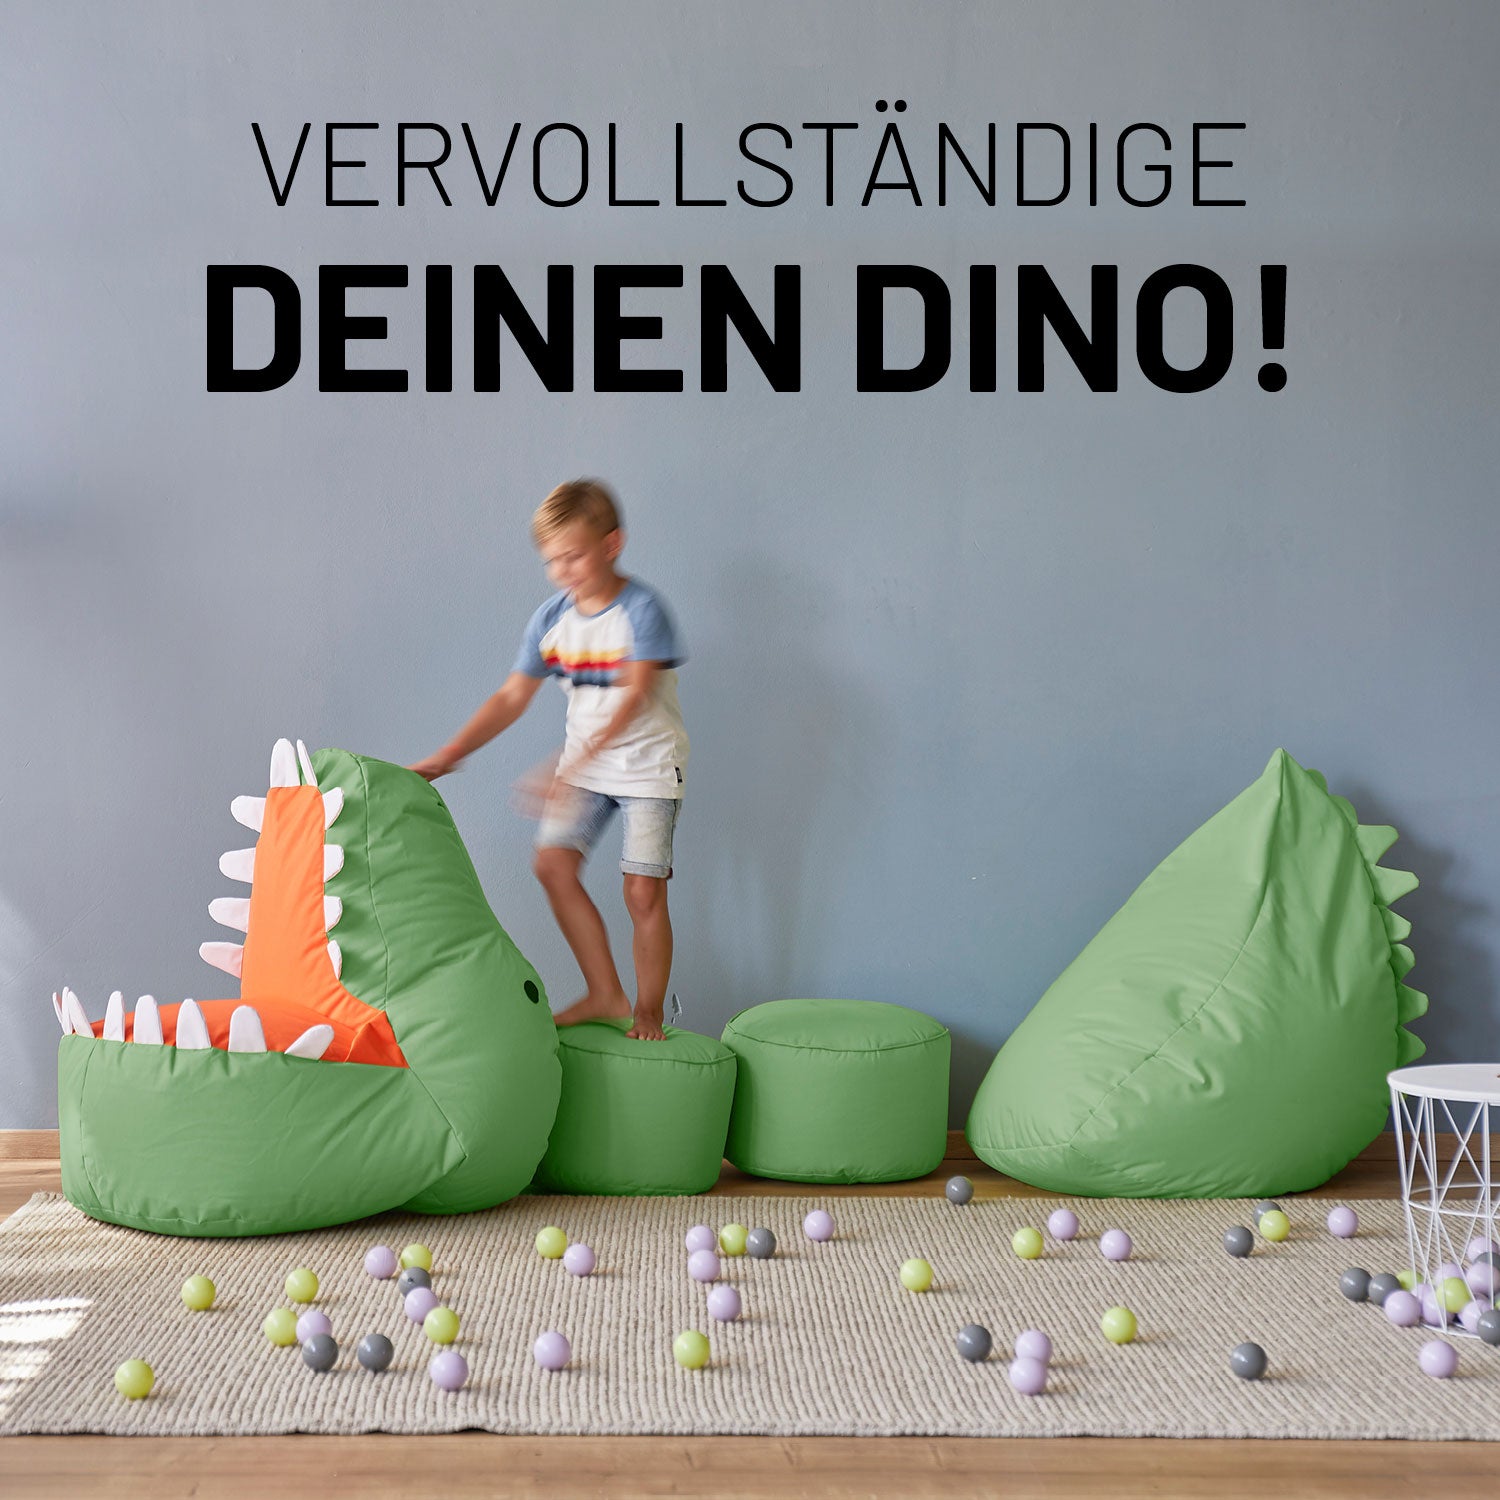 Kindersitzsack Animal Line Dino (270 L) - indoor & outdoor - Pastell Grün